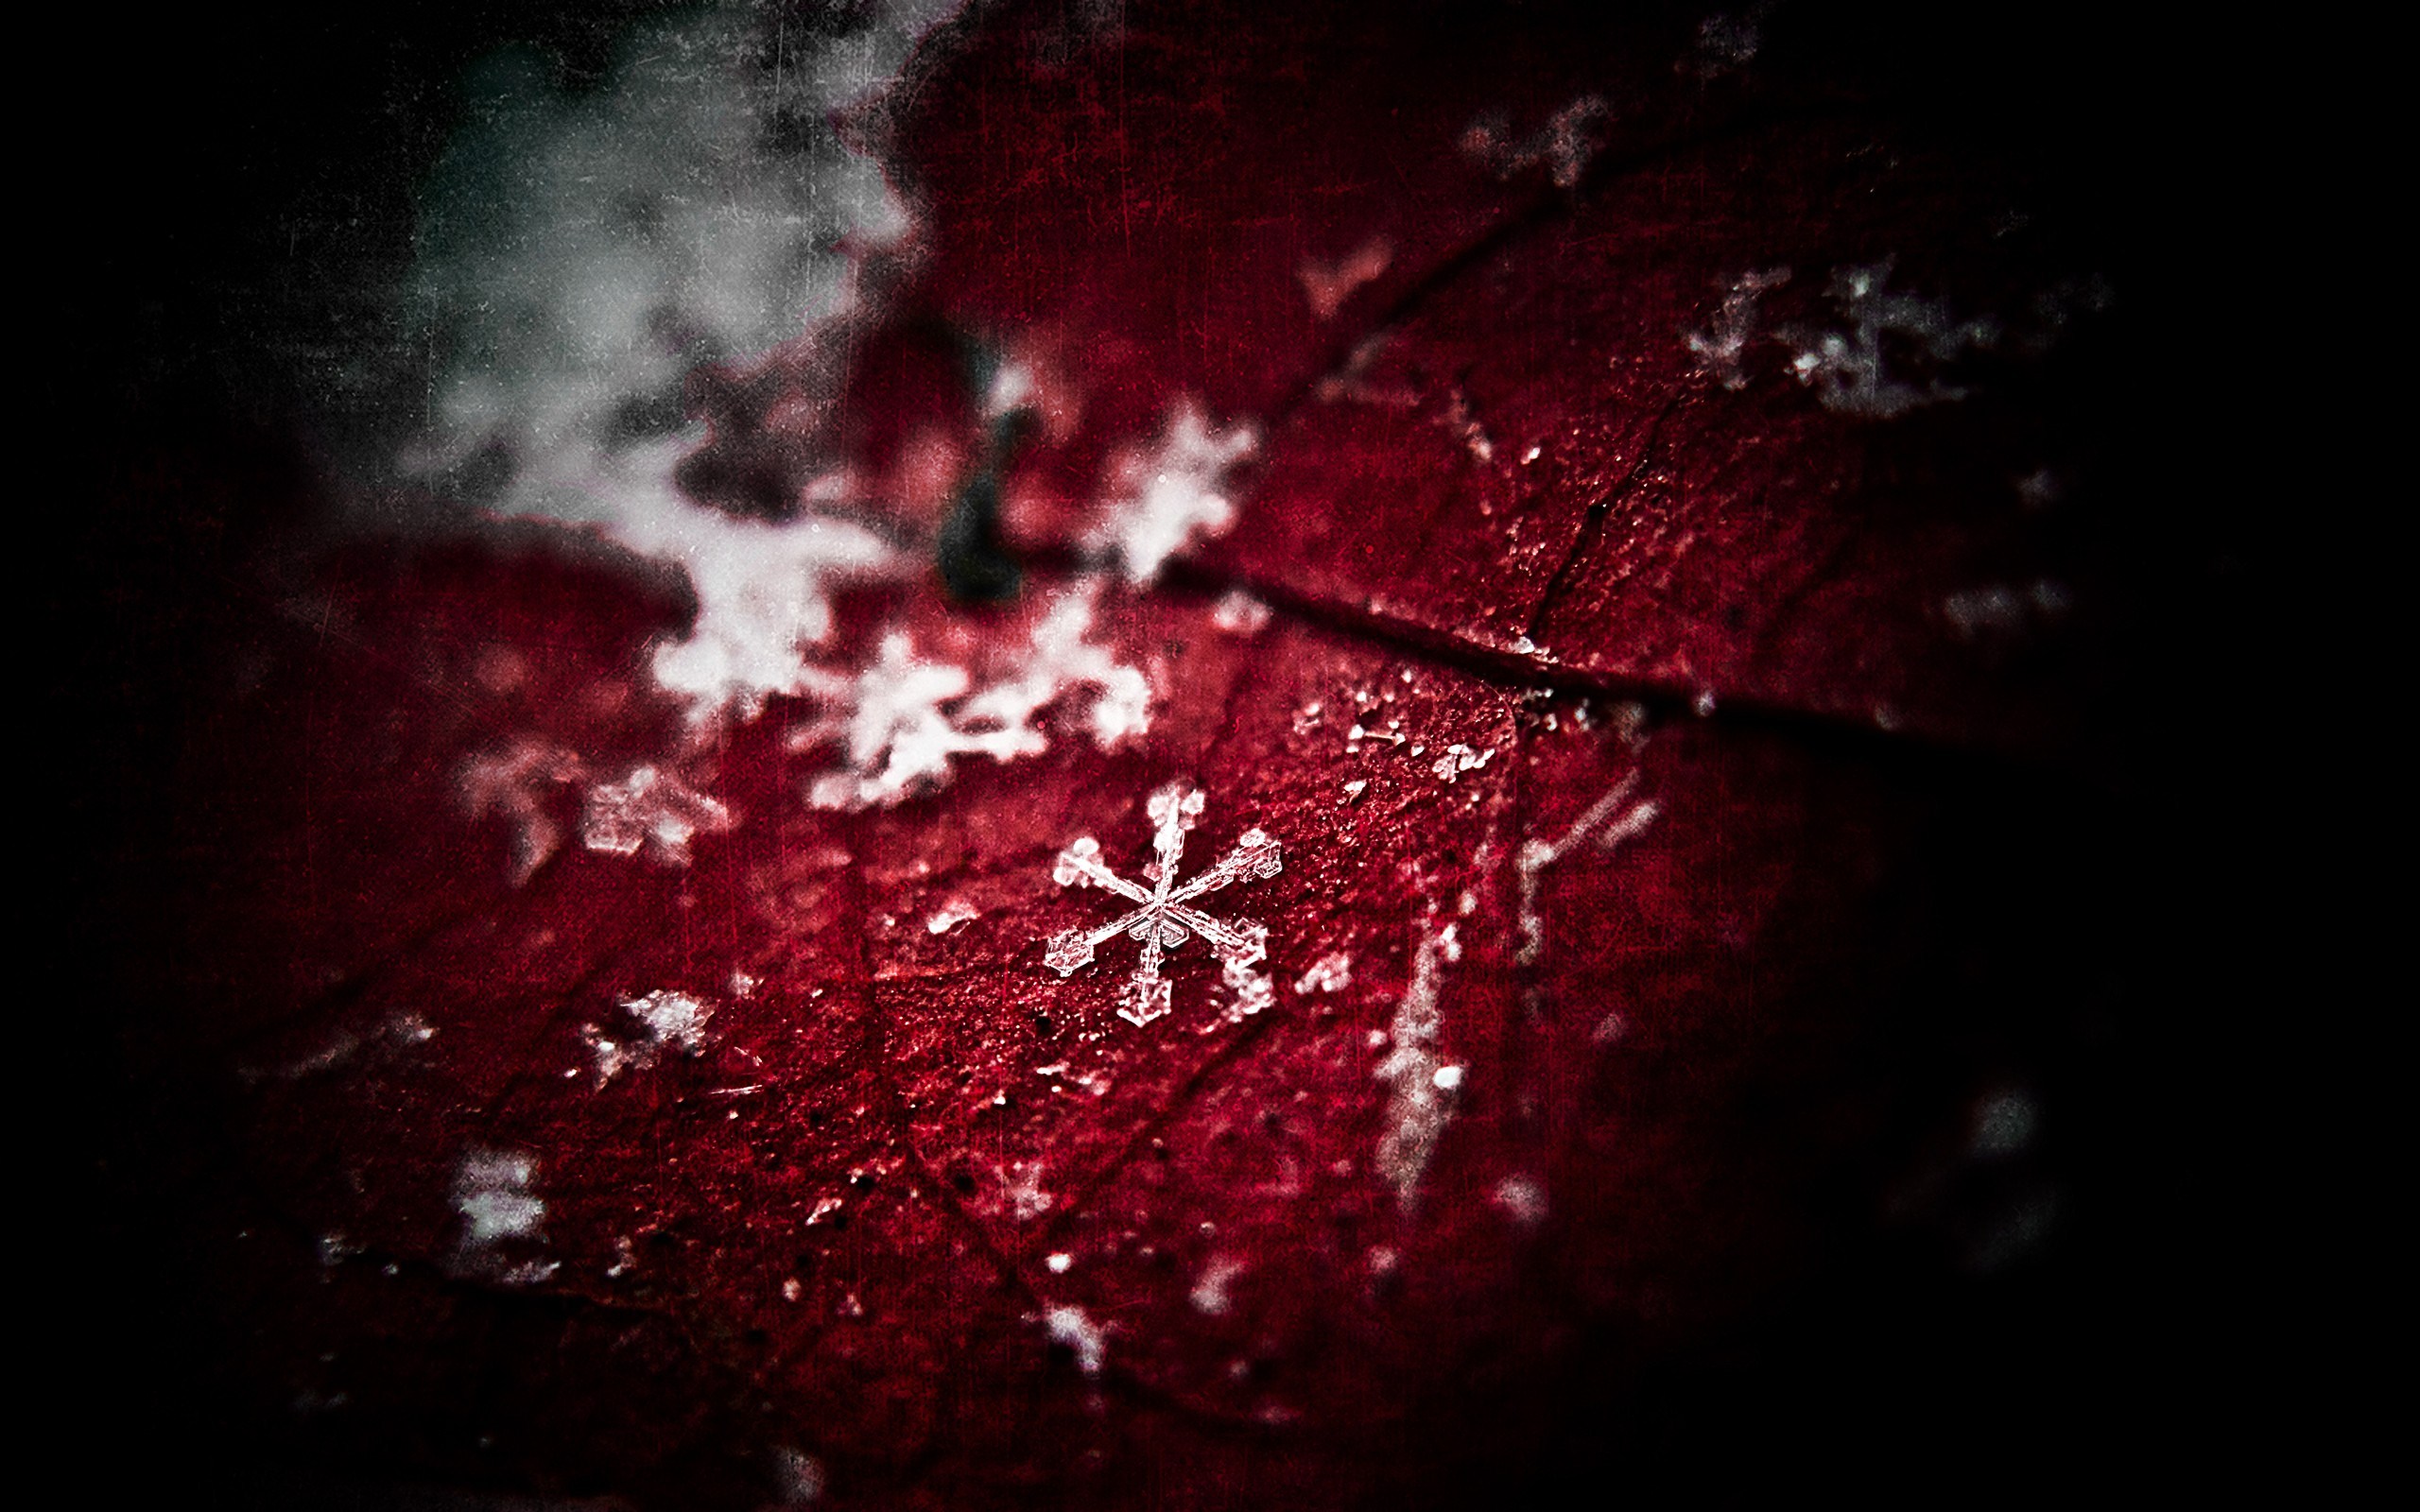 nkc_leaf-snowflakes-winter-close-up-photo-wallpaper-2560x1600.jpg